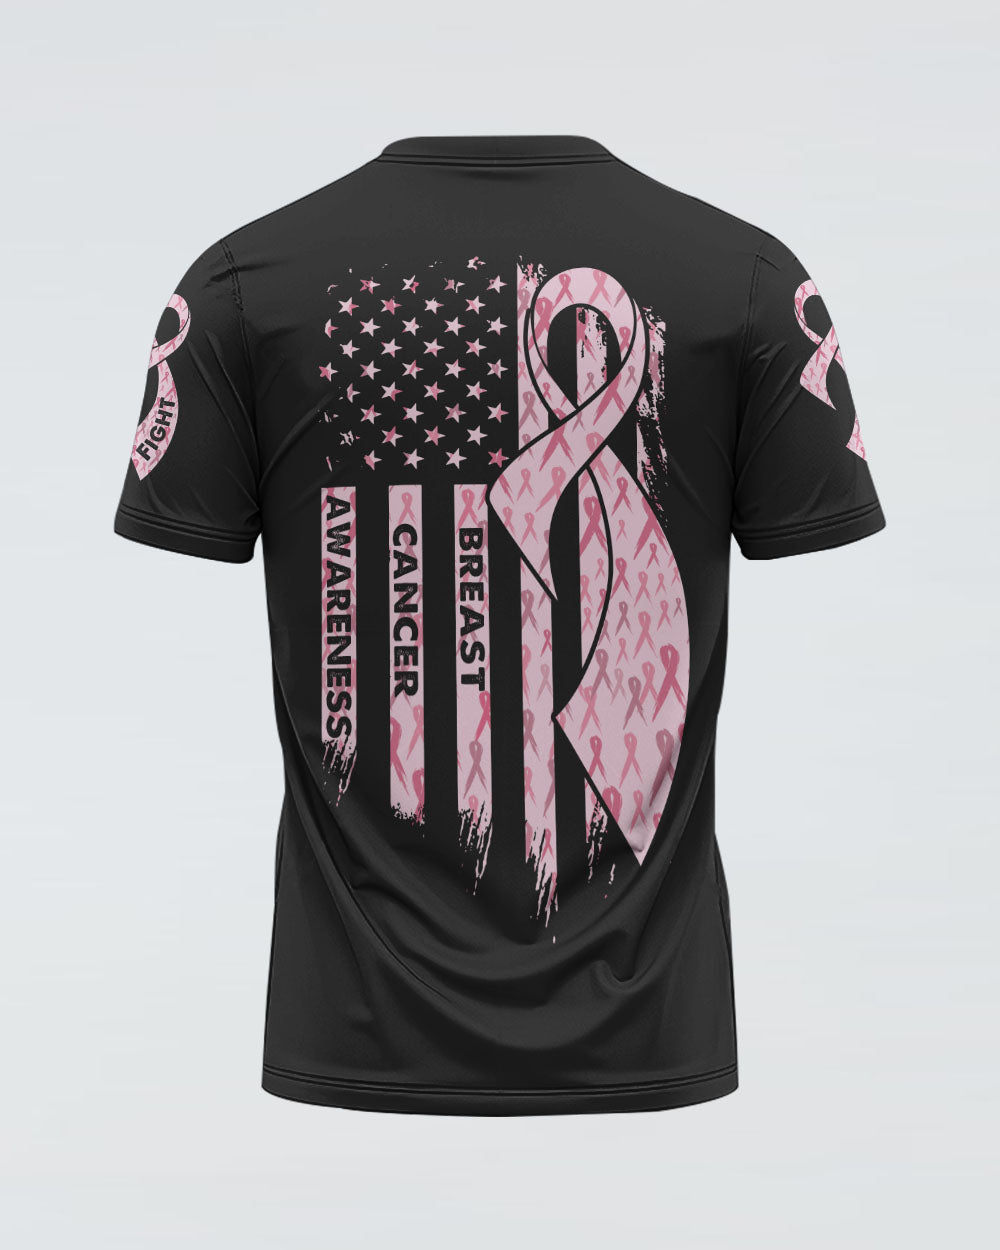 Pink Ribbon Flag Women's Breast Cancer Awareness Tshirt